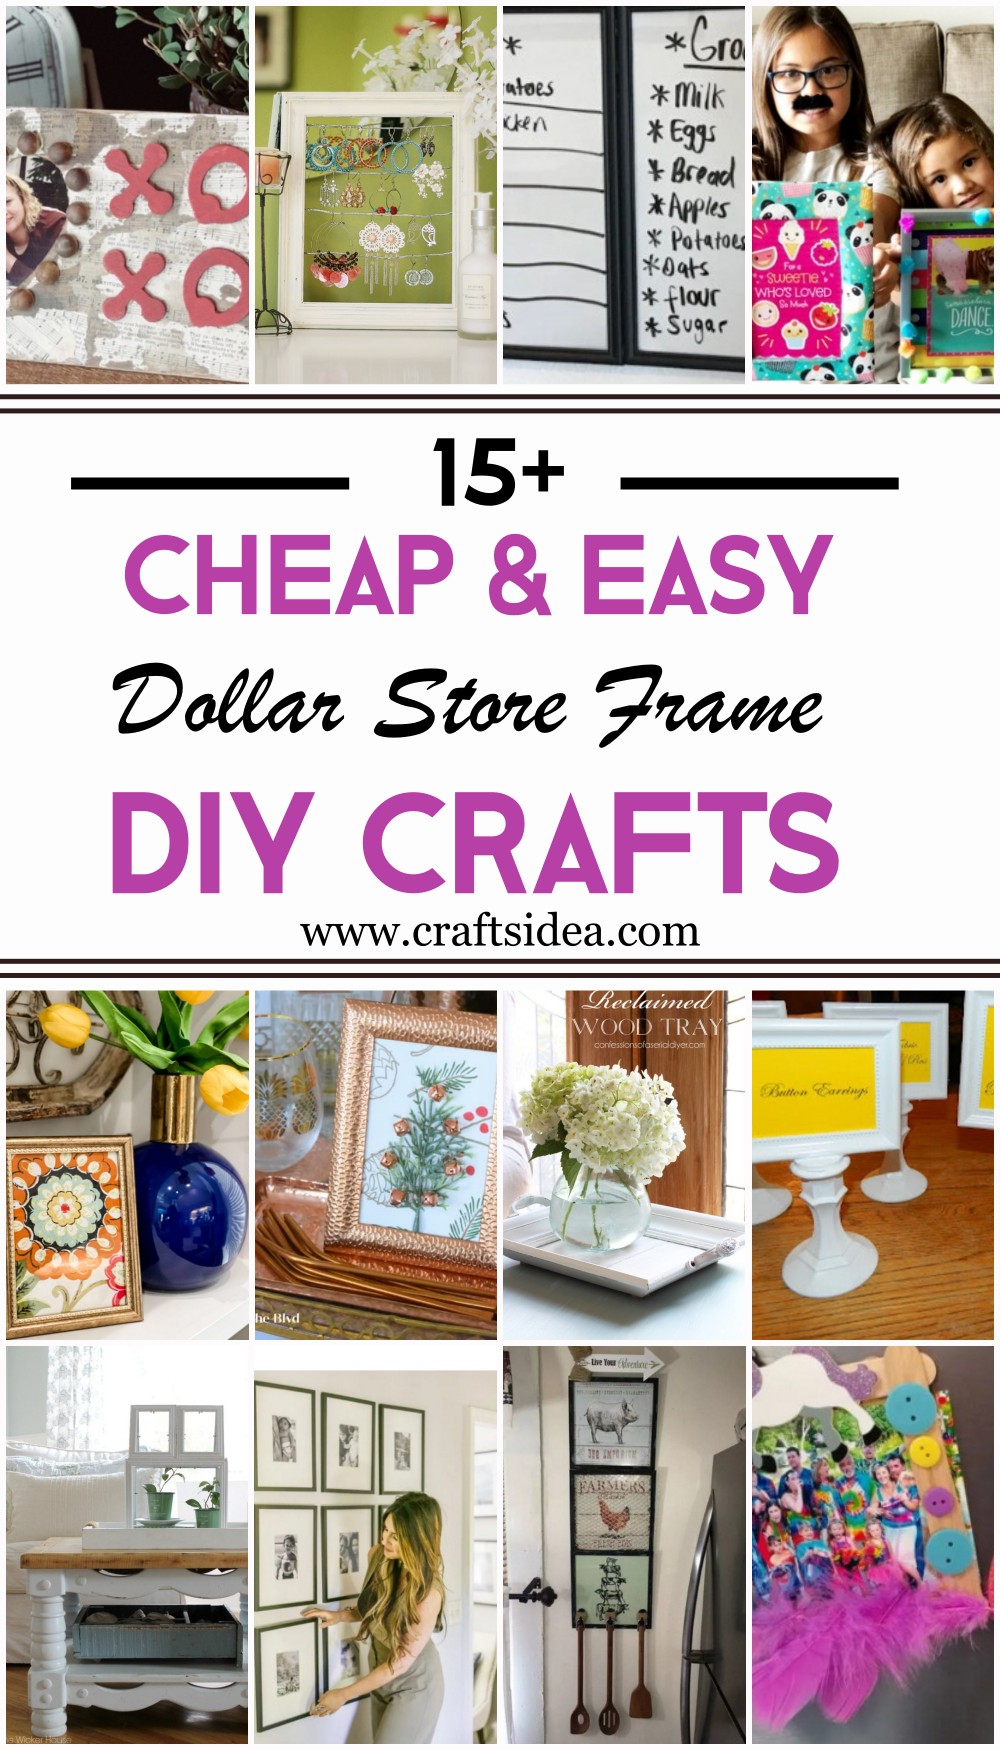 DIY Dollar Store Frame Crafts 1